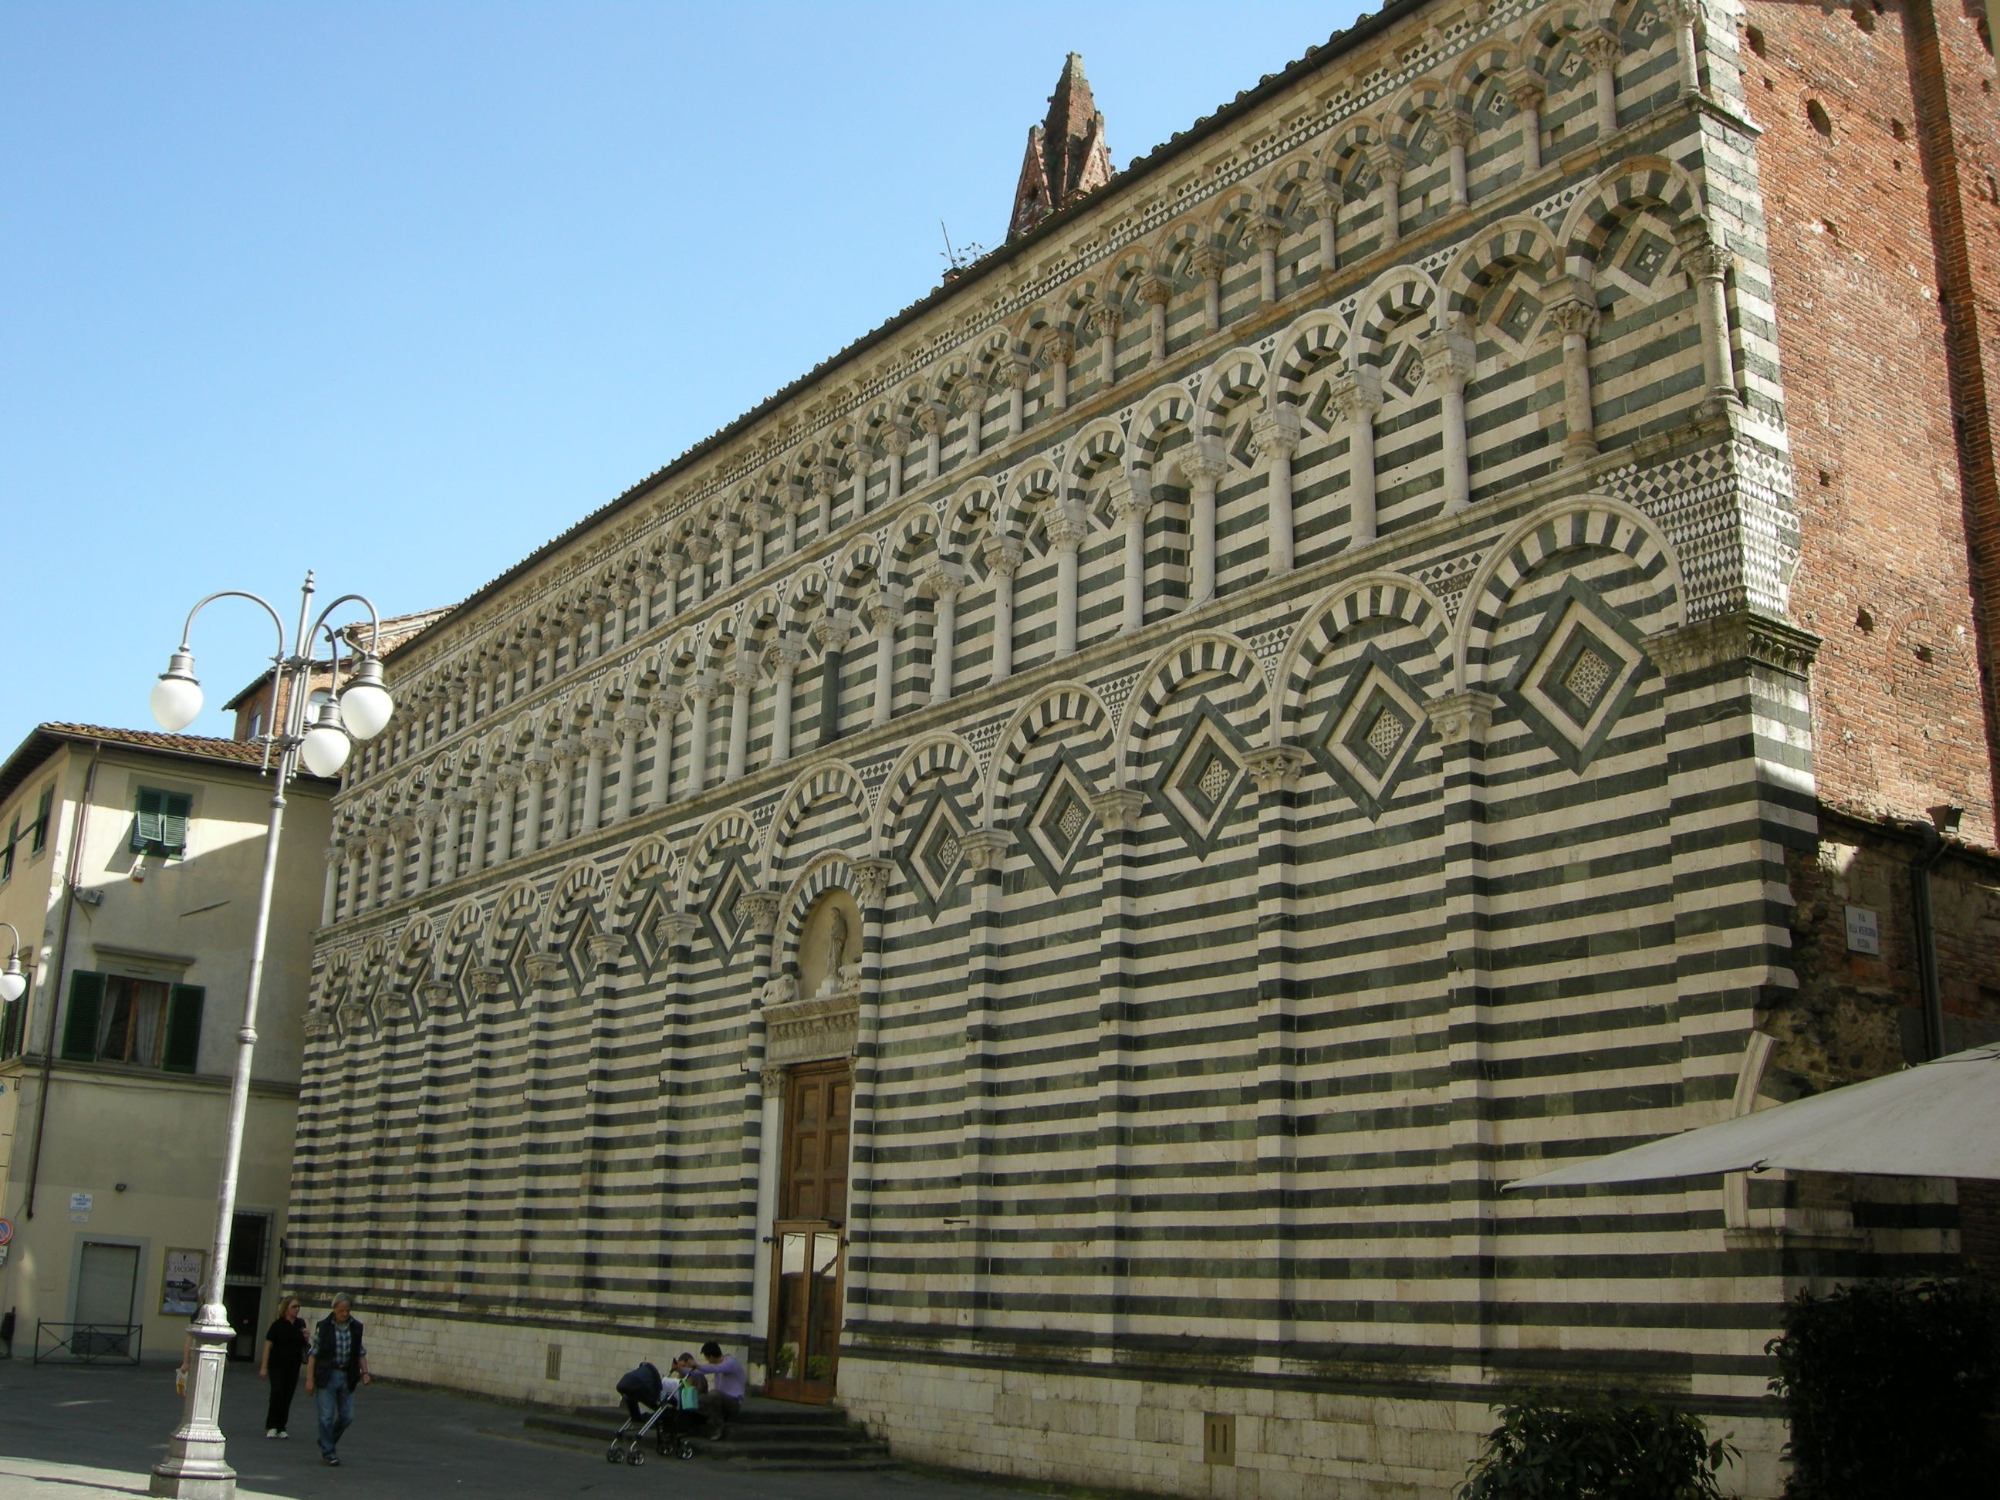 San Giovanni Fuorcivitas, Pistoia